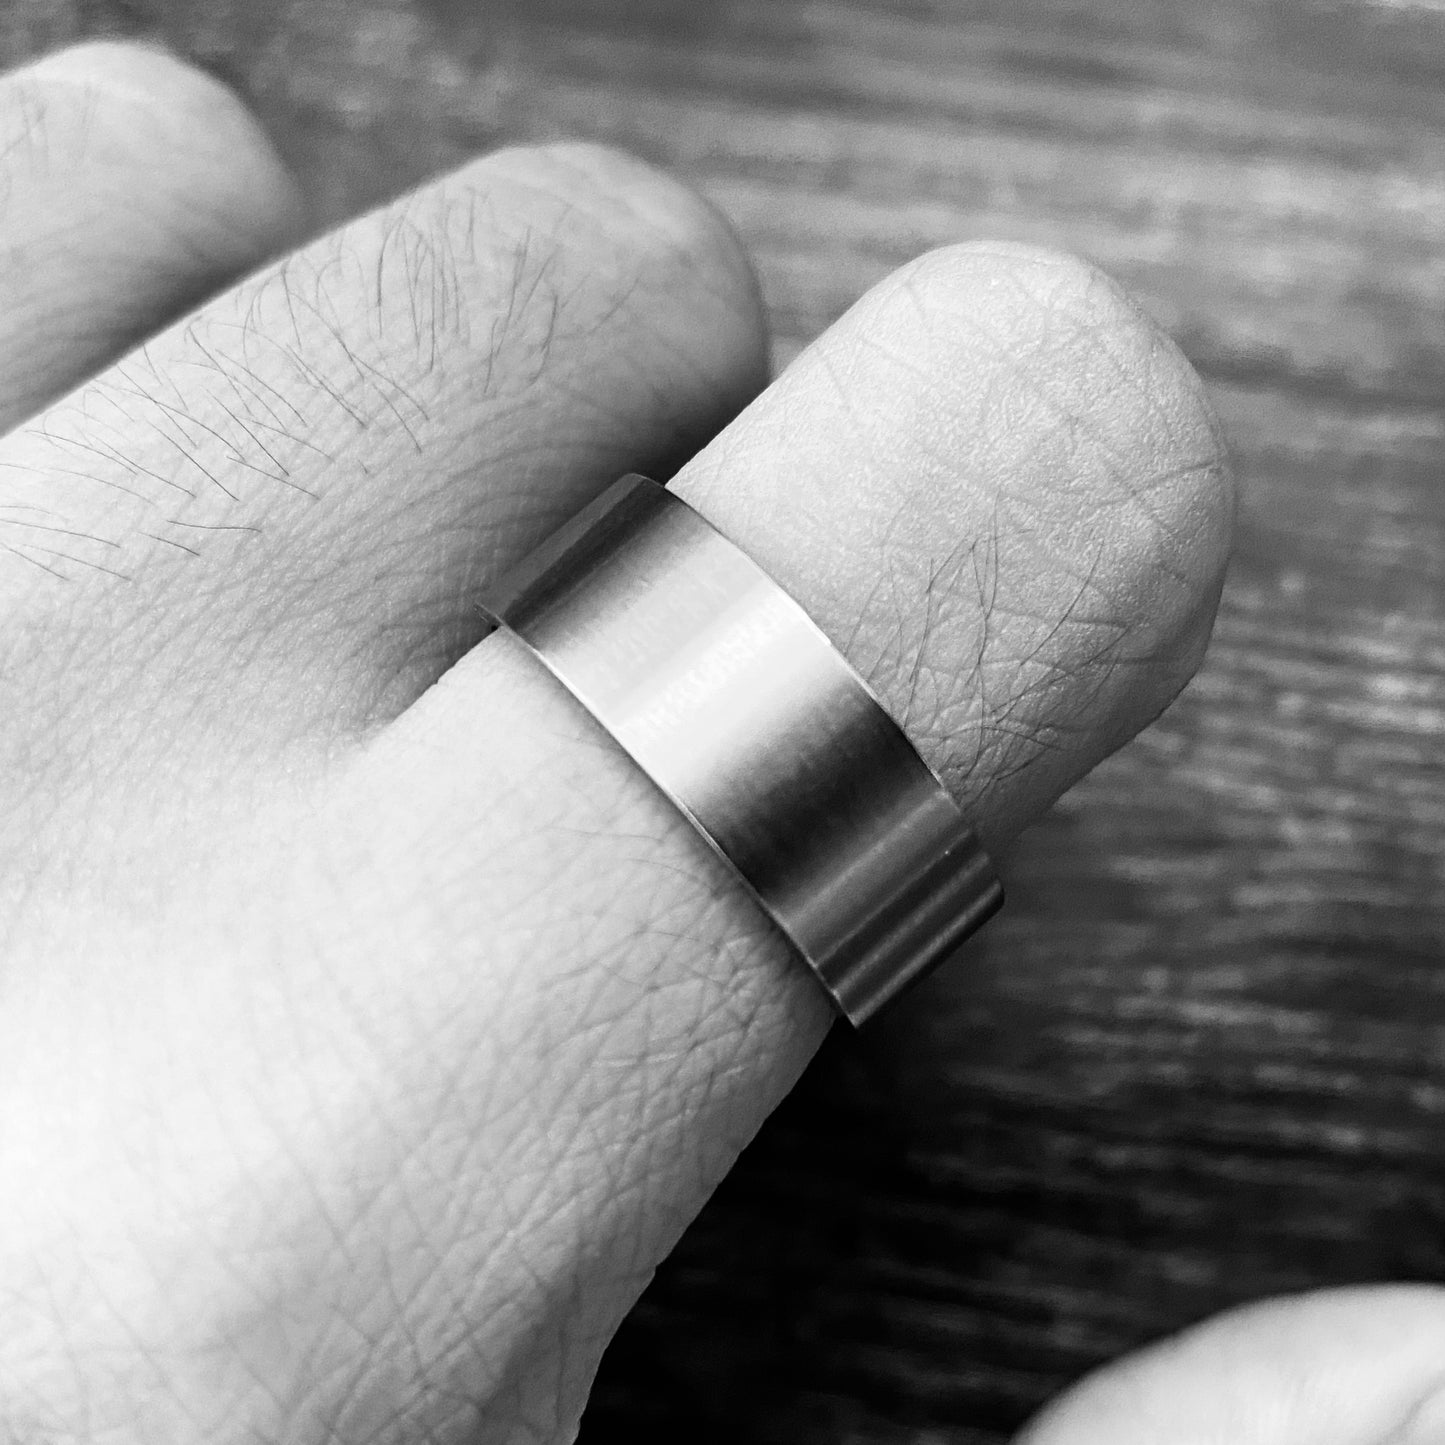 Brushed Steel Ring